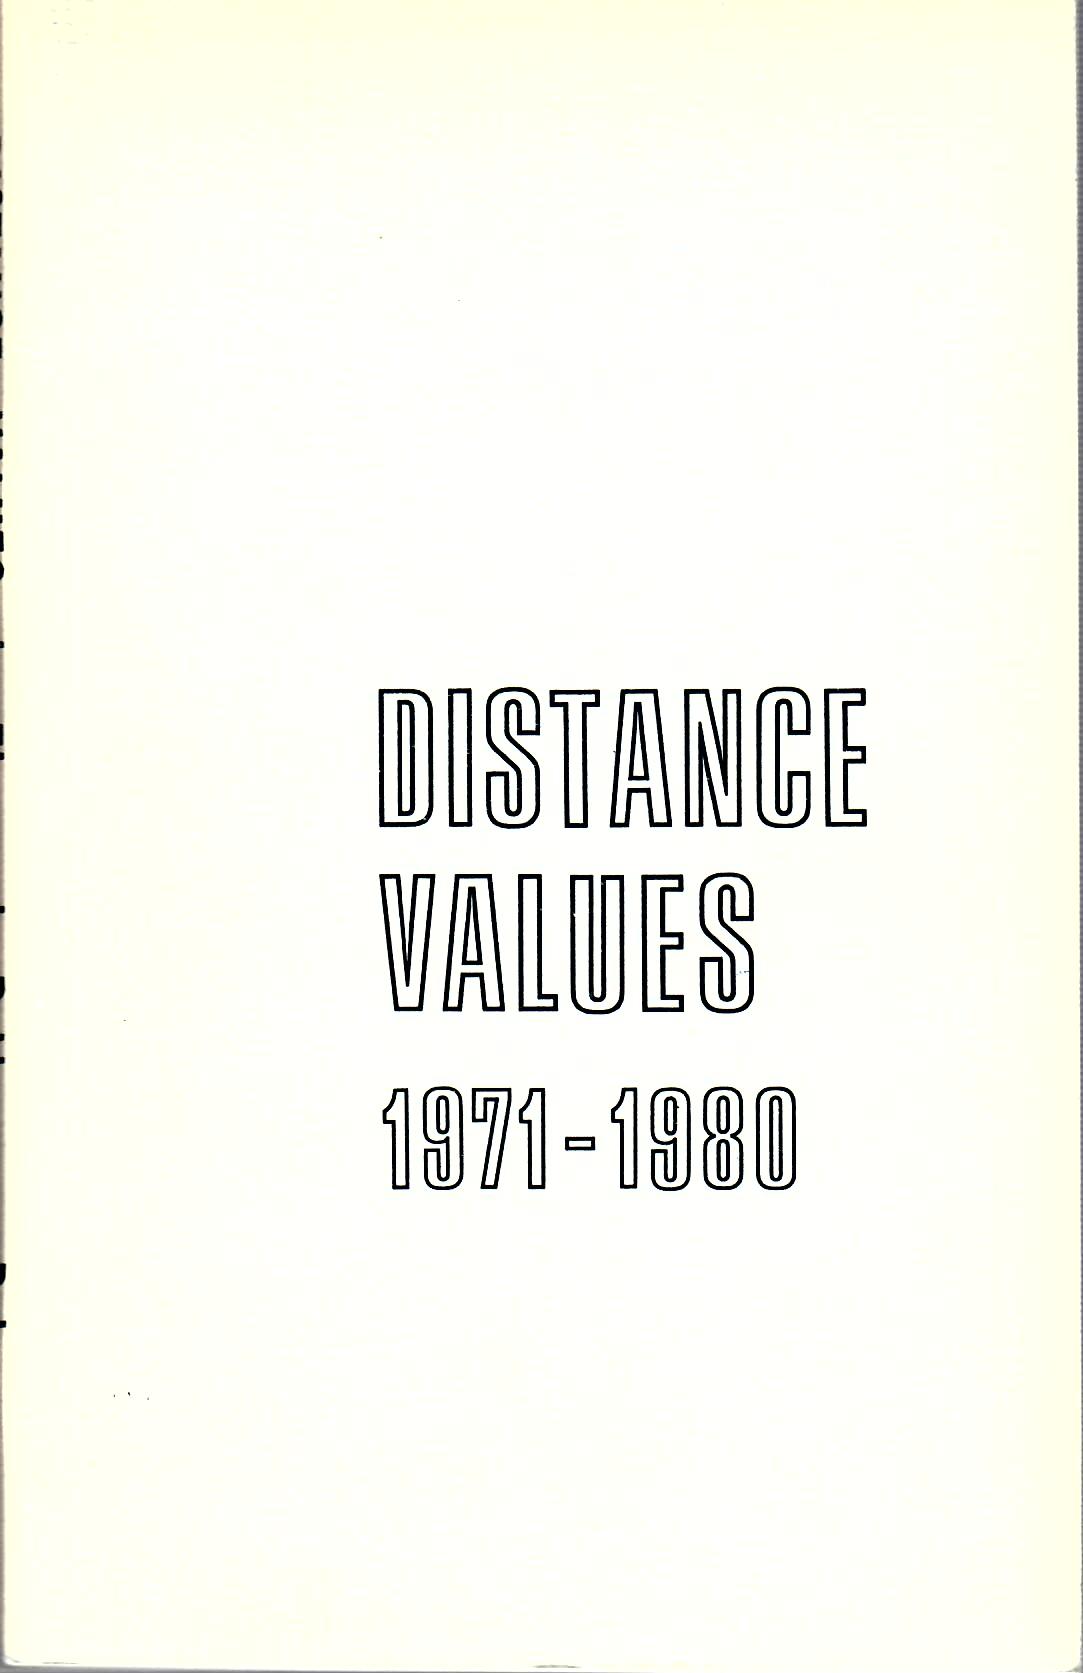 Zipporah Pettenger Dobyns   : Distance Values 1971-1980 by ZIPPORAH POTTENGER DOBYNS : Compiled, Computerized and Edited by Zipporah Pettenger Debyns, Ph.D. and Staff :